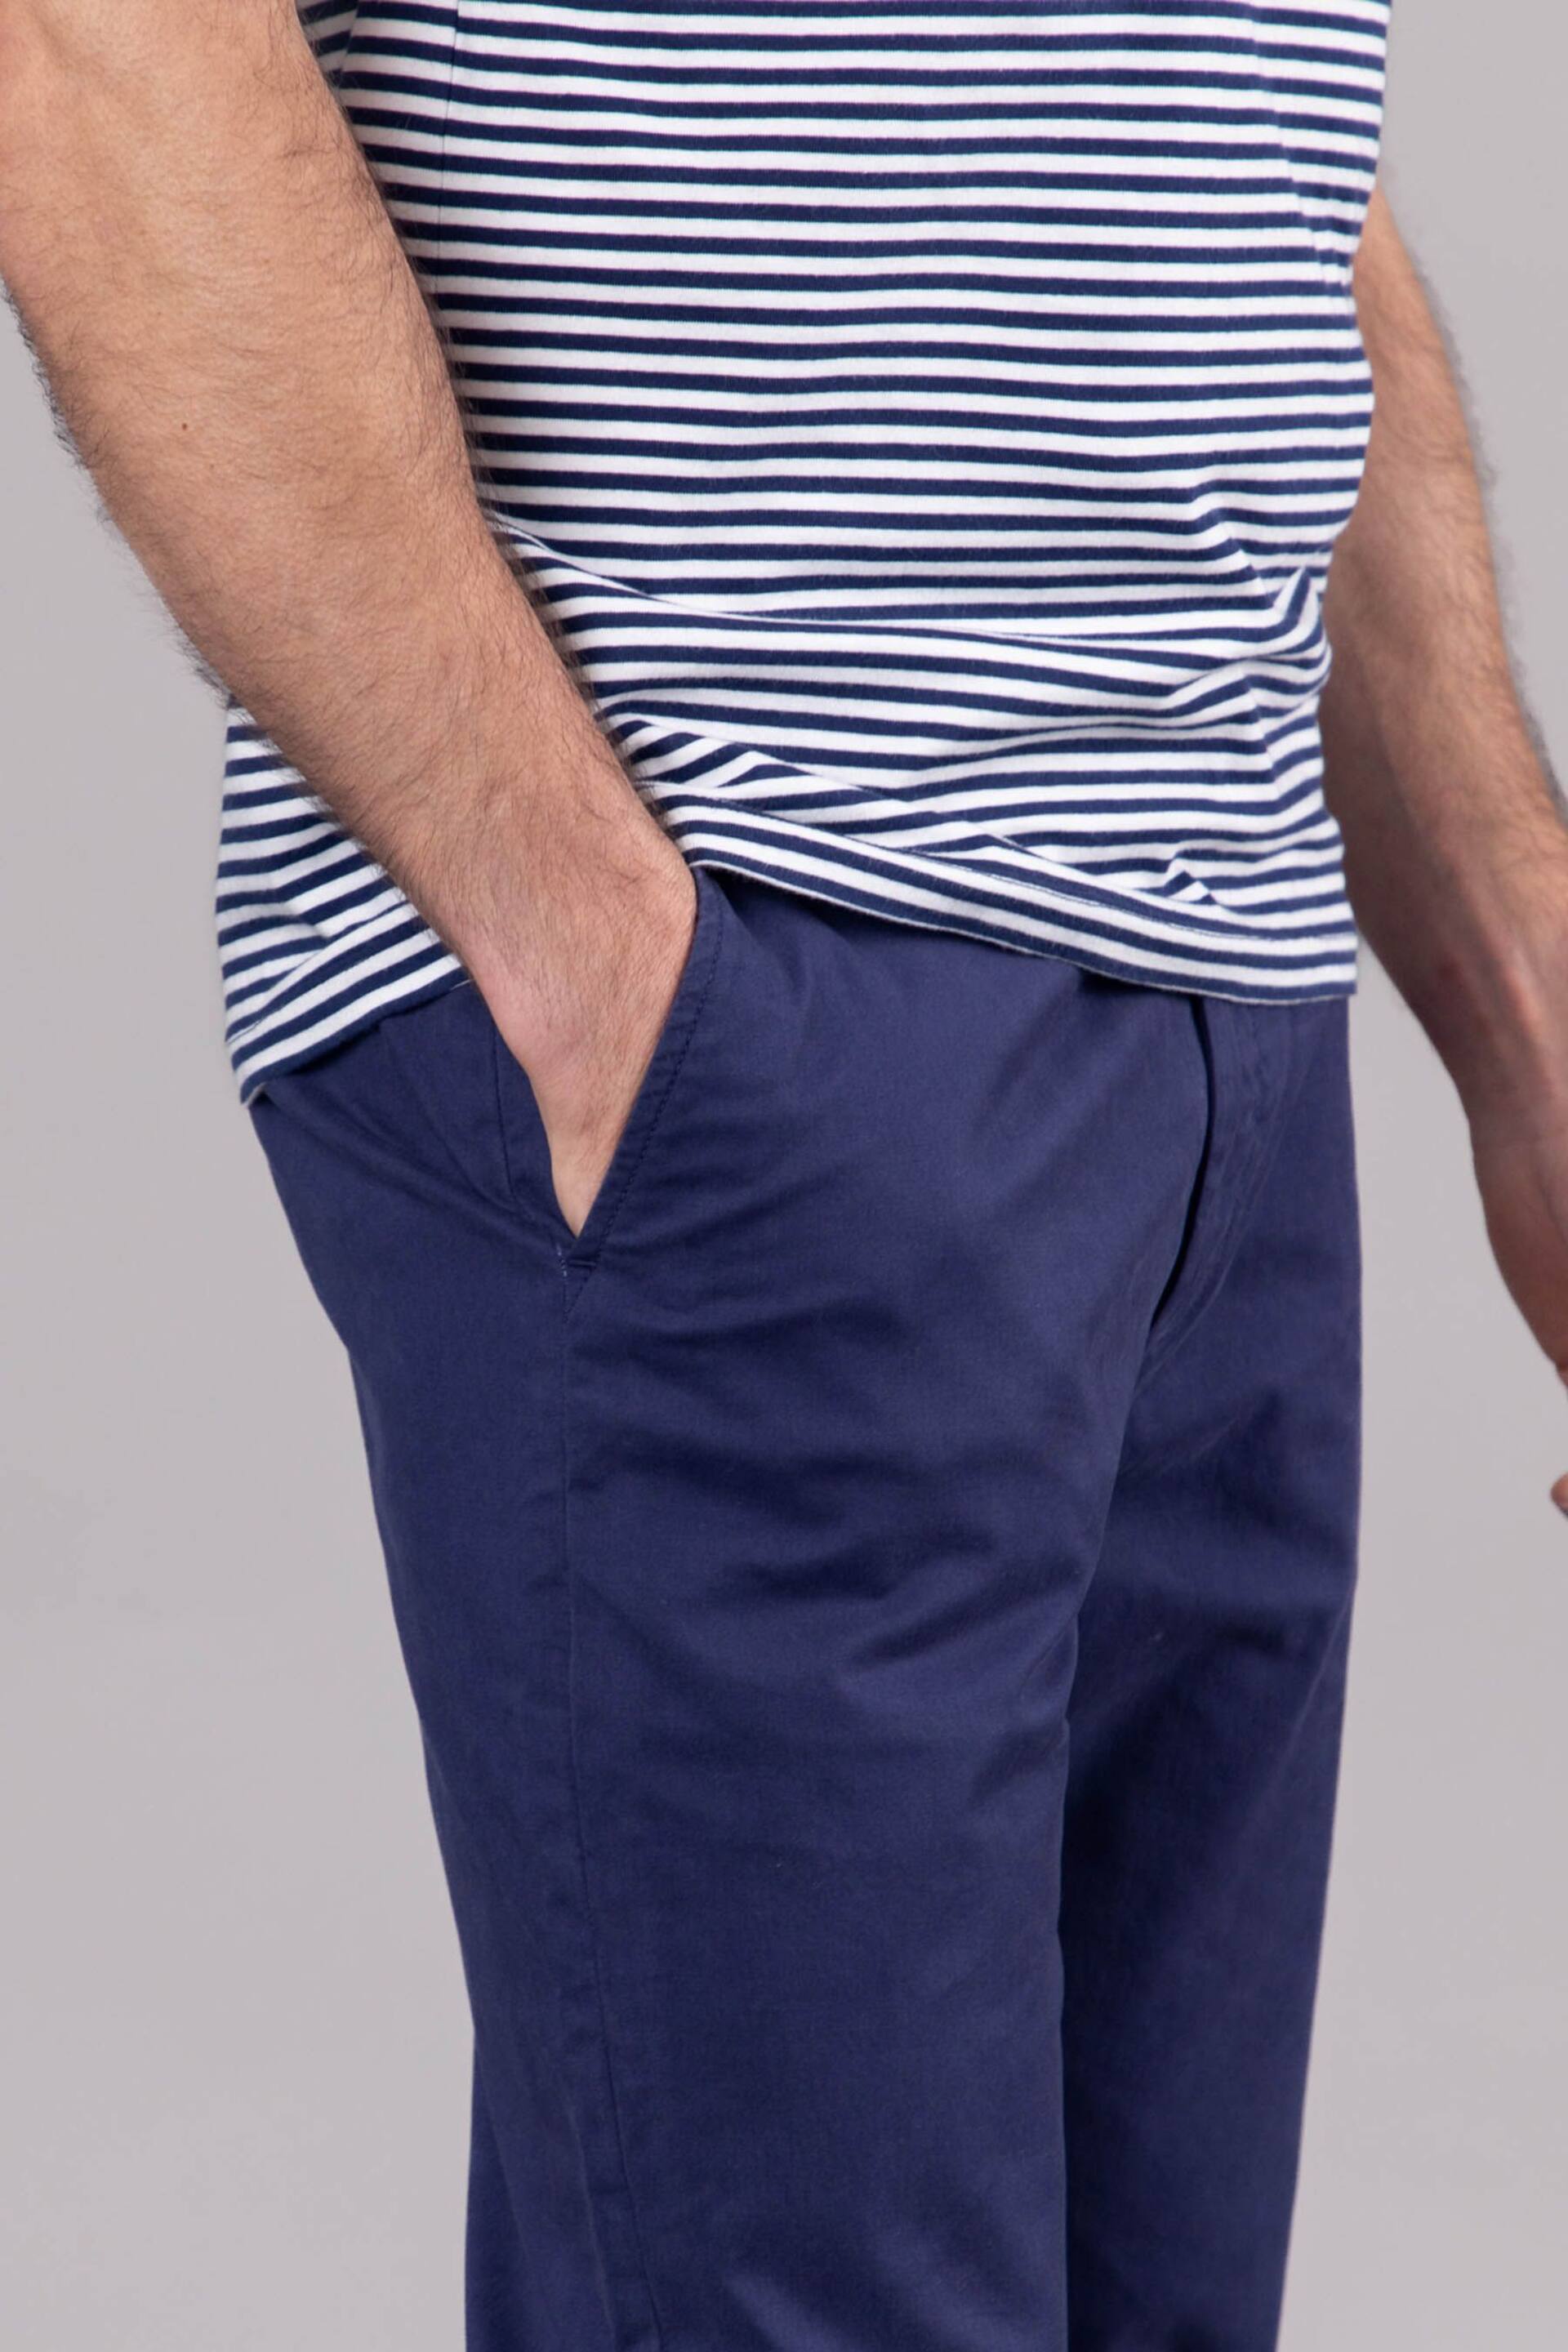 Lakeland Clothing Blue Noel Cotton Chinos Trousers - Image 4 of 5